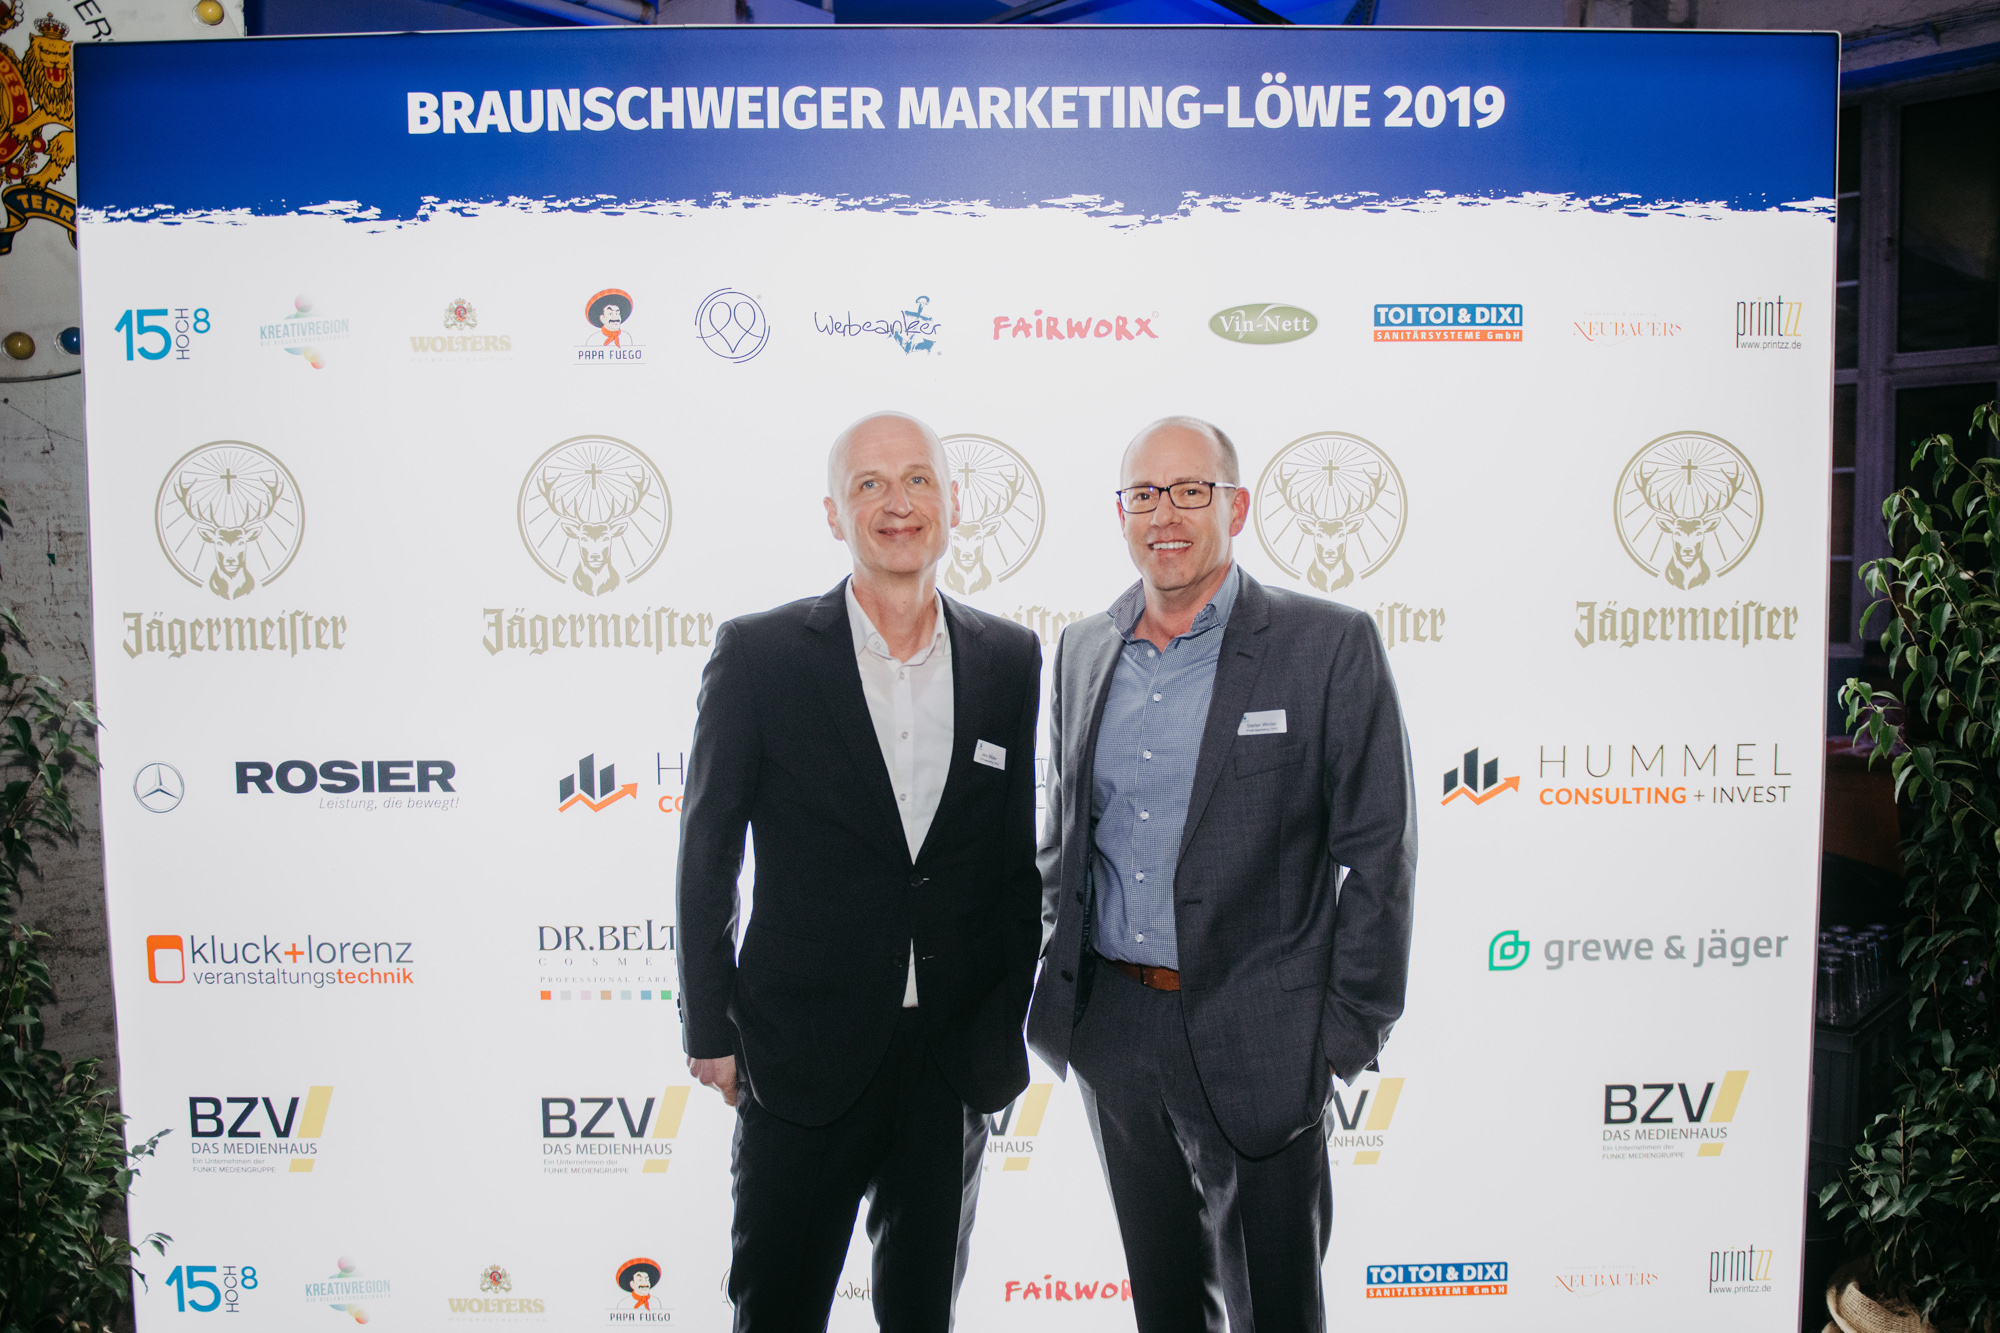 MCBS Marketing-Loewe 2019 small 57